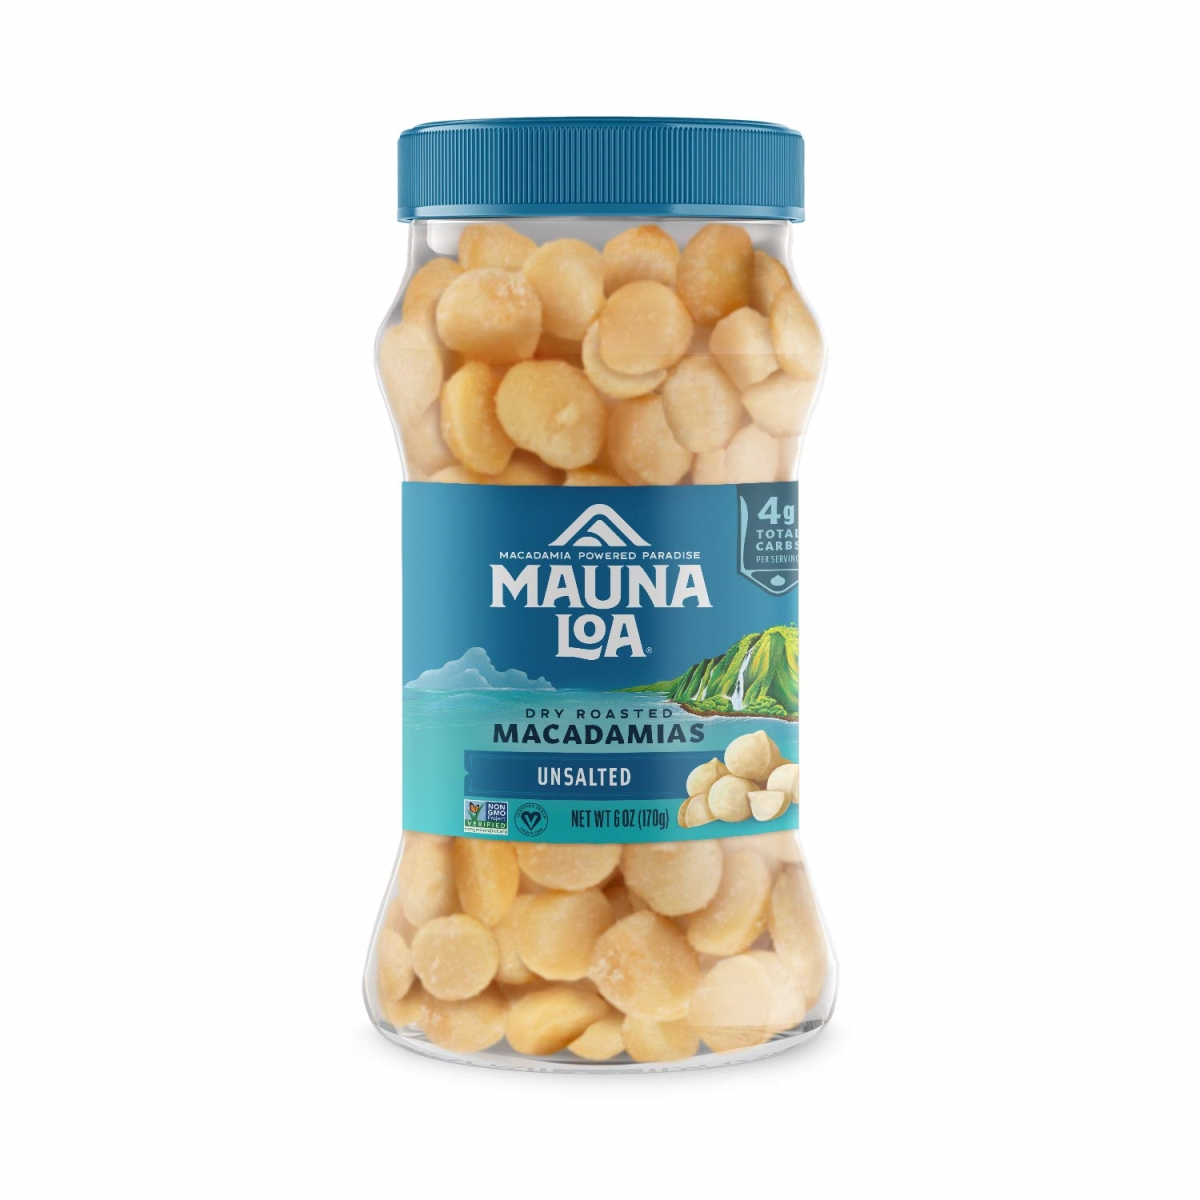 392561 6 oz Premium Unsalted Macadamia Nuts, Pack of 12 -  Mauna Loa